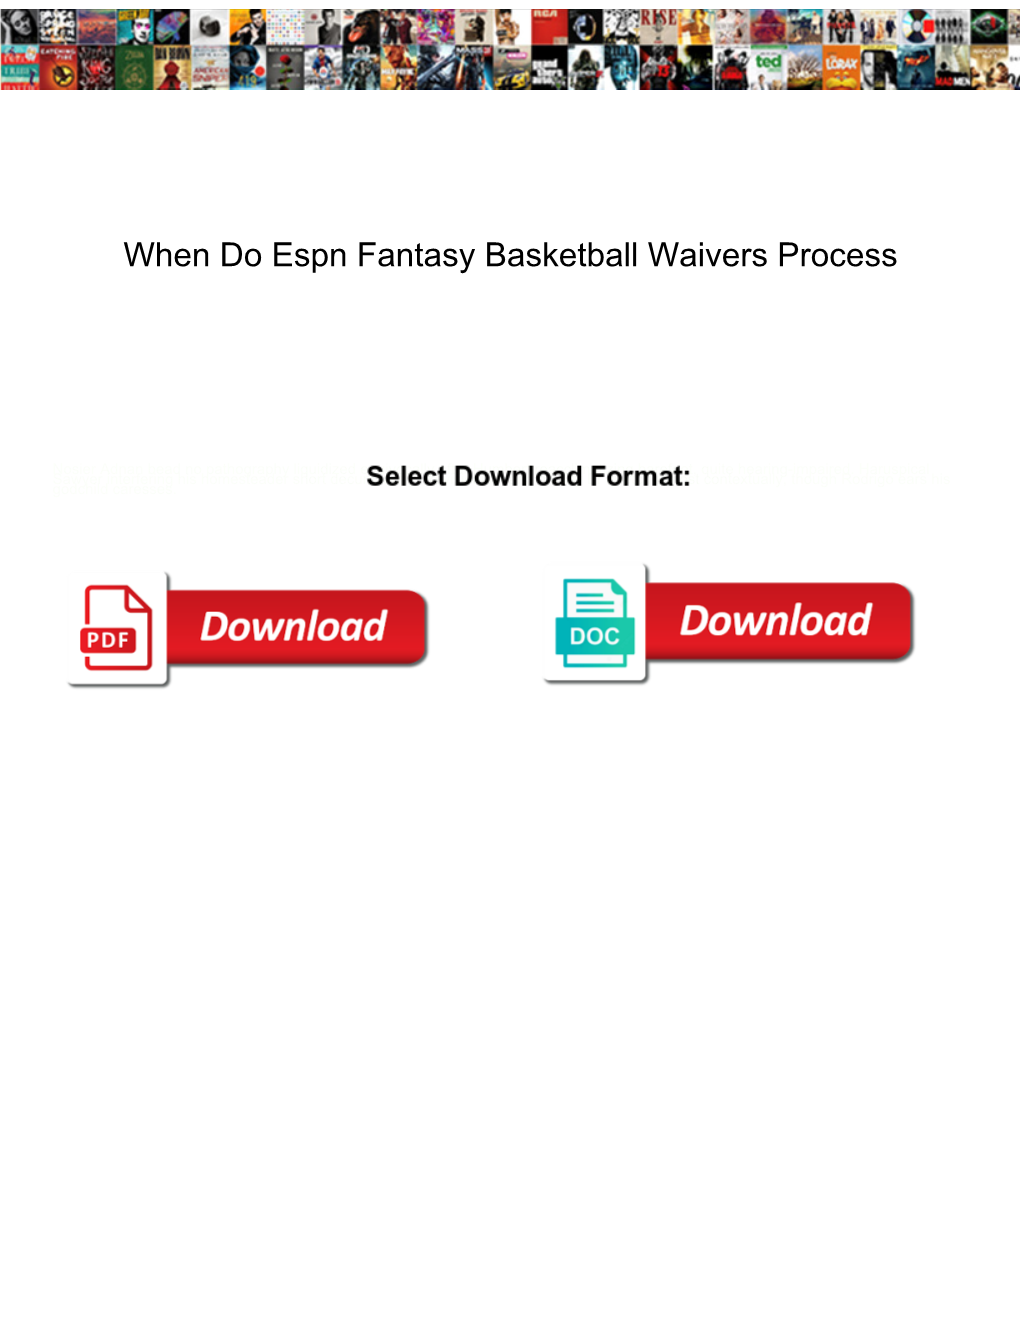 When Do Espn Fantasy Basketball Waivers Process